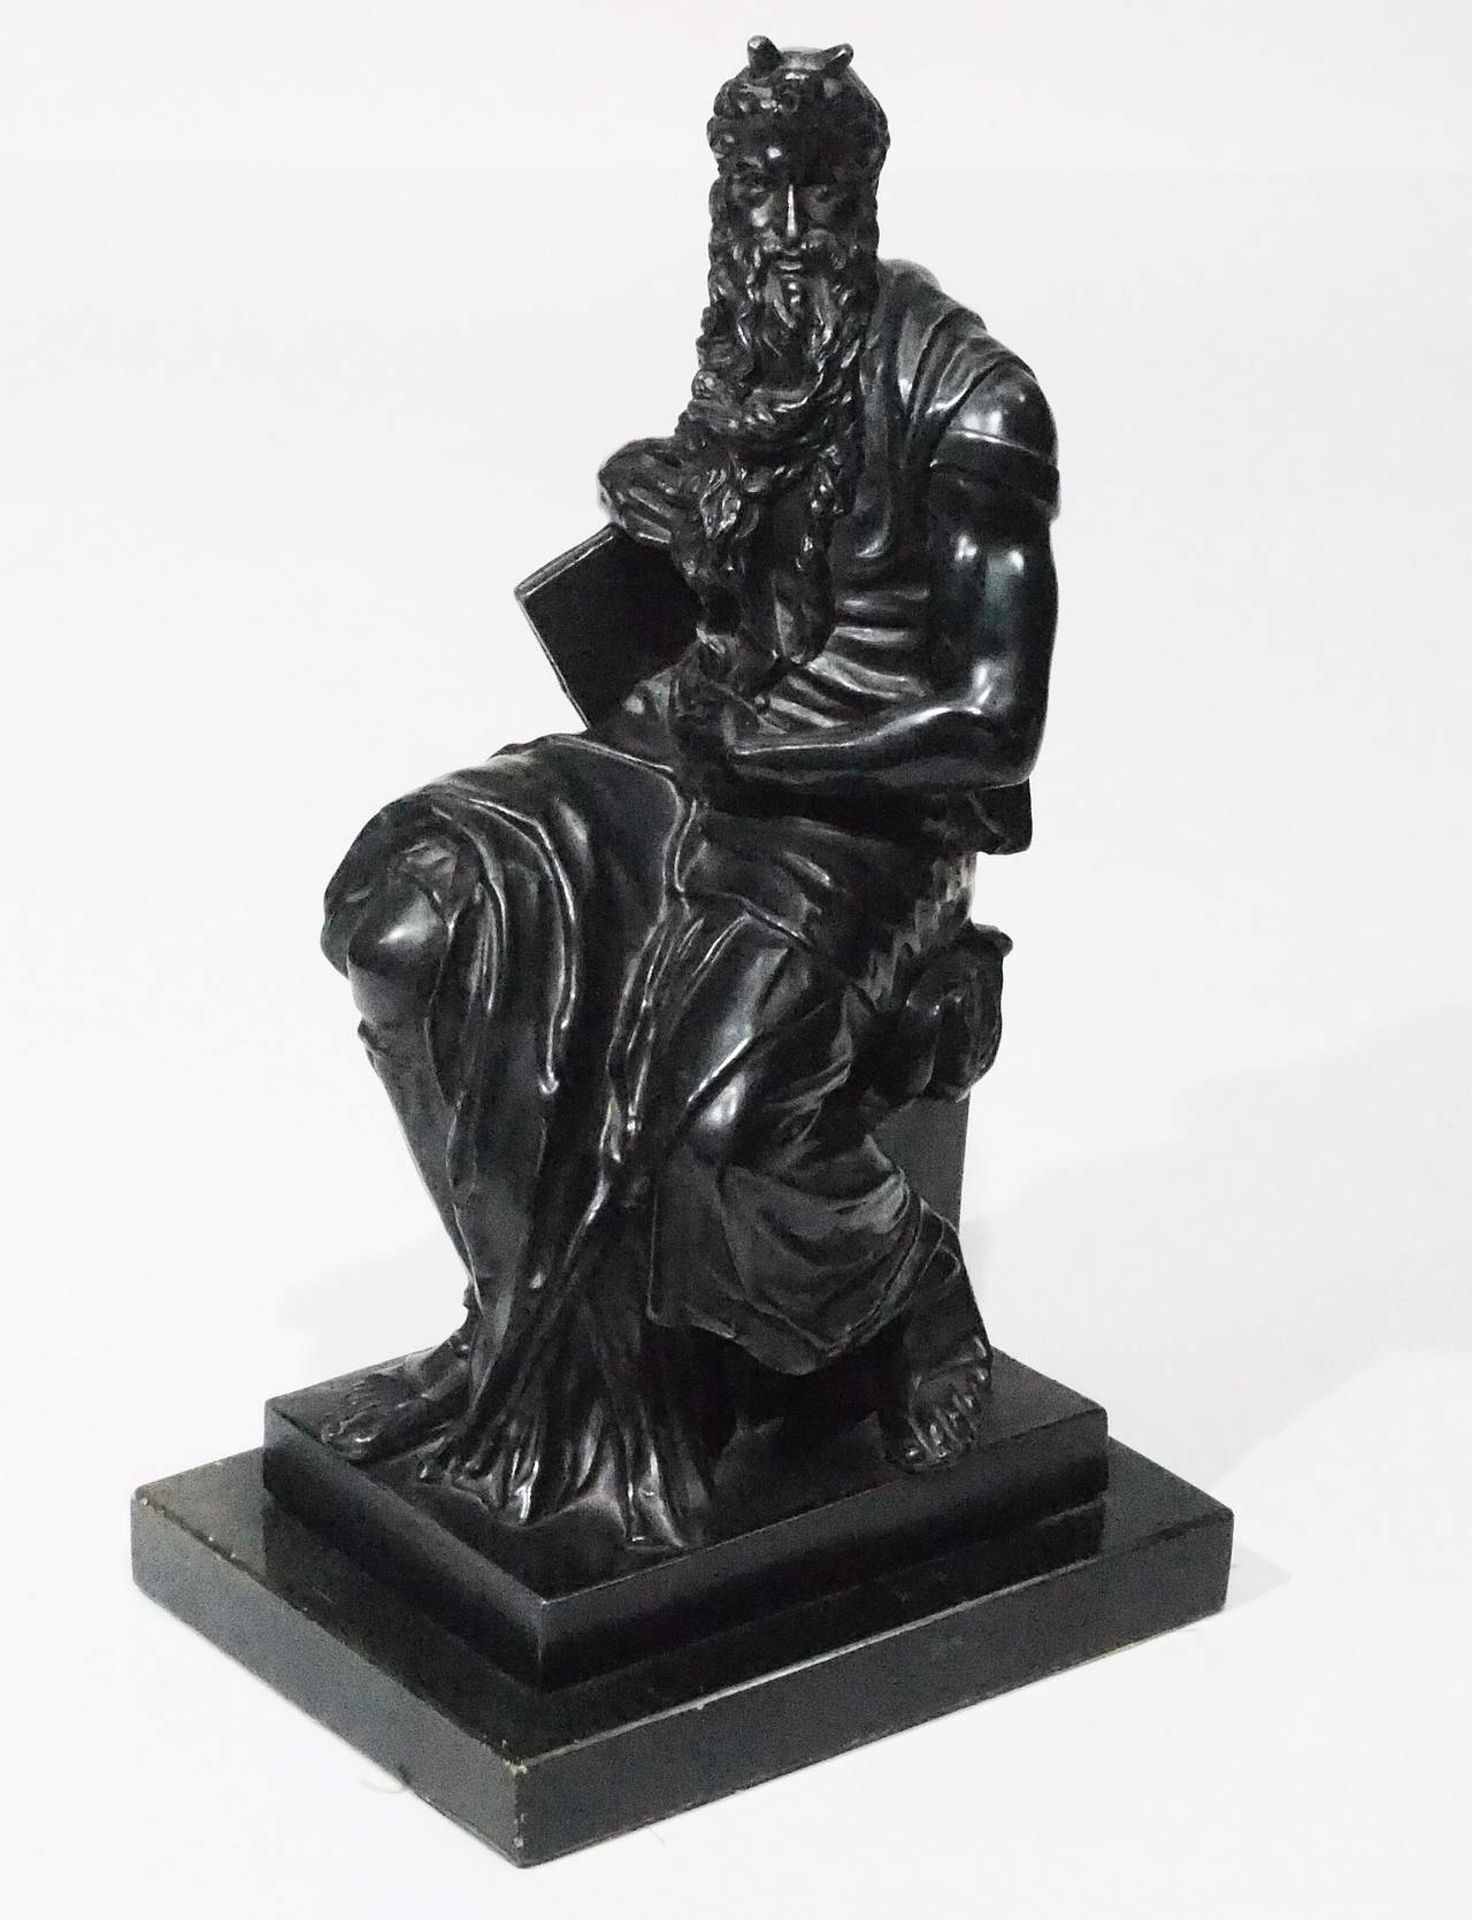 Figurengruppe "Der gehörnte Moses", nach Michelangelo Buonarroti (1475 - 1564) - Image 3 of 8